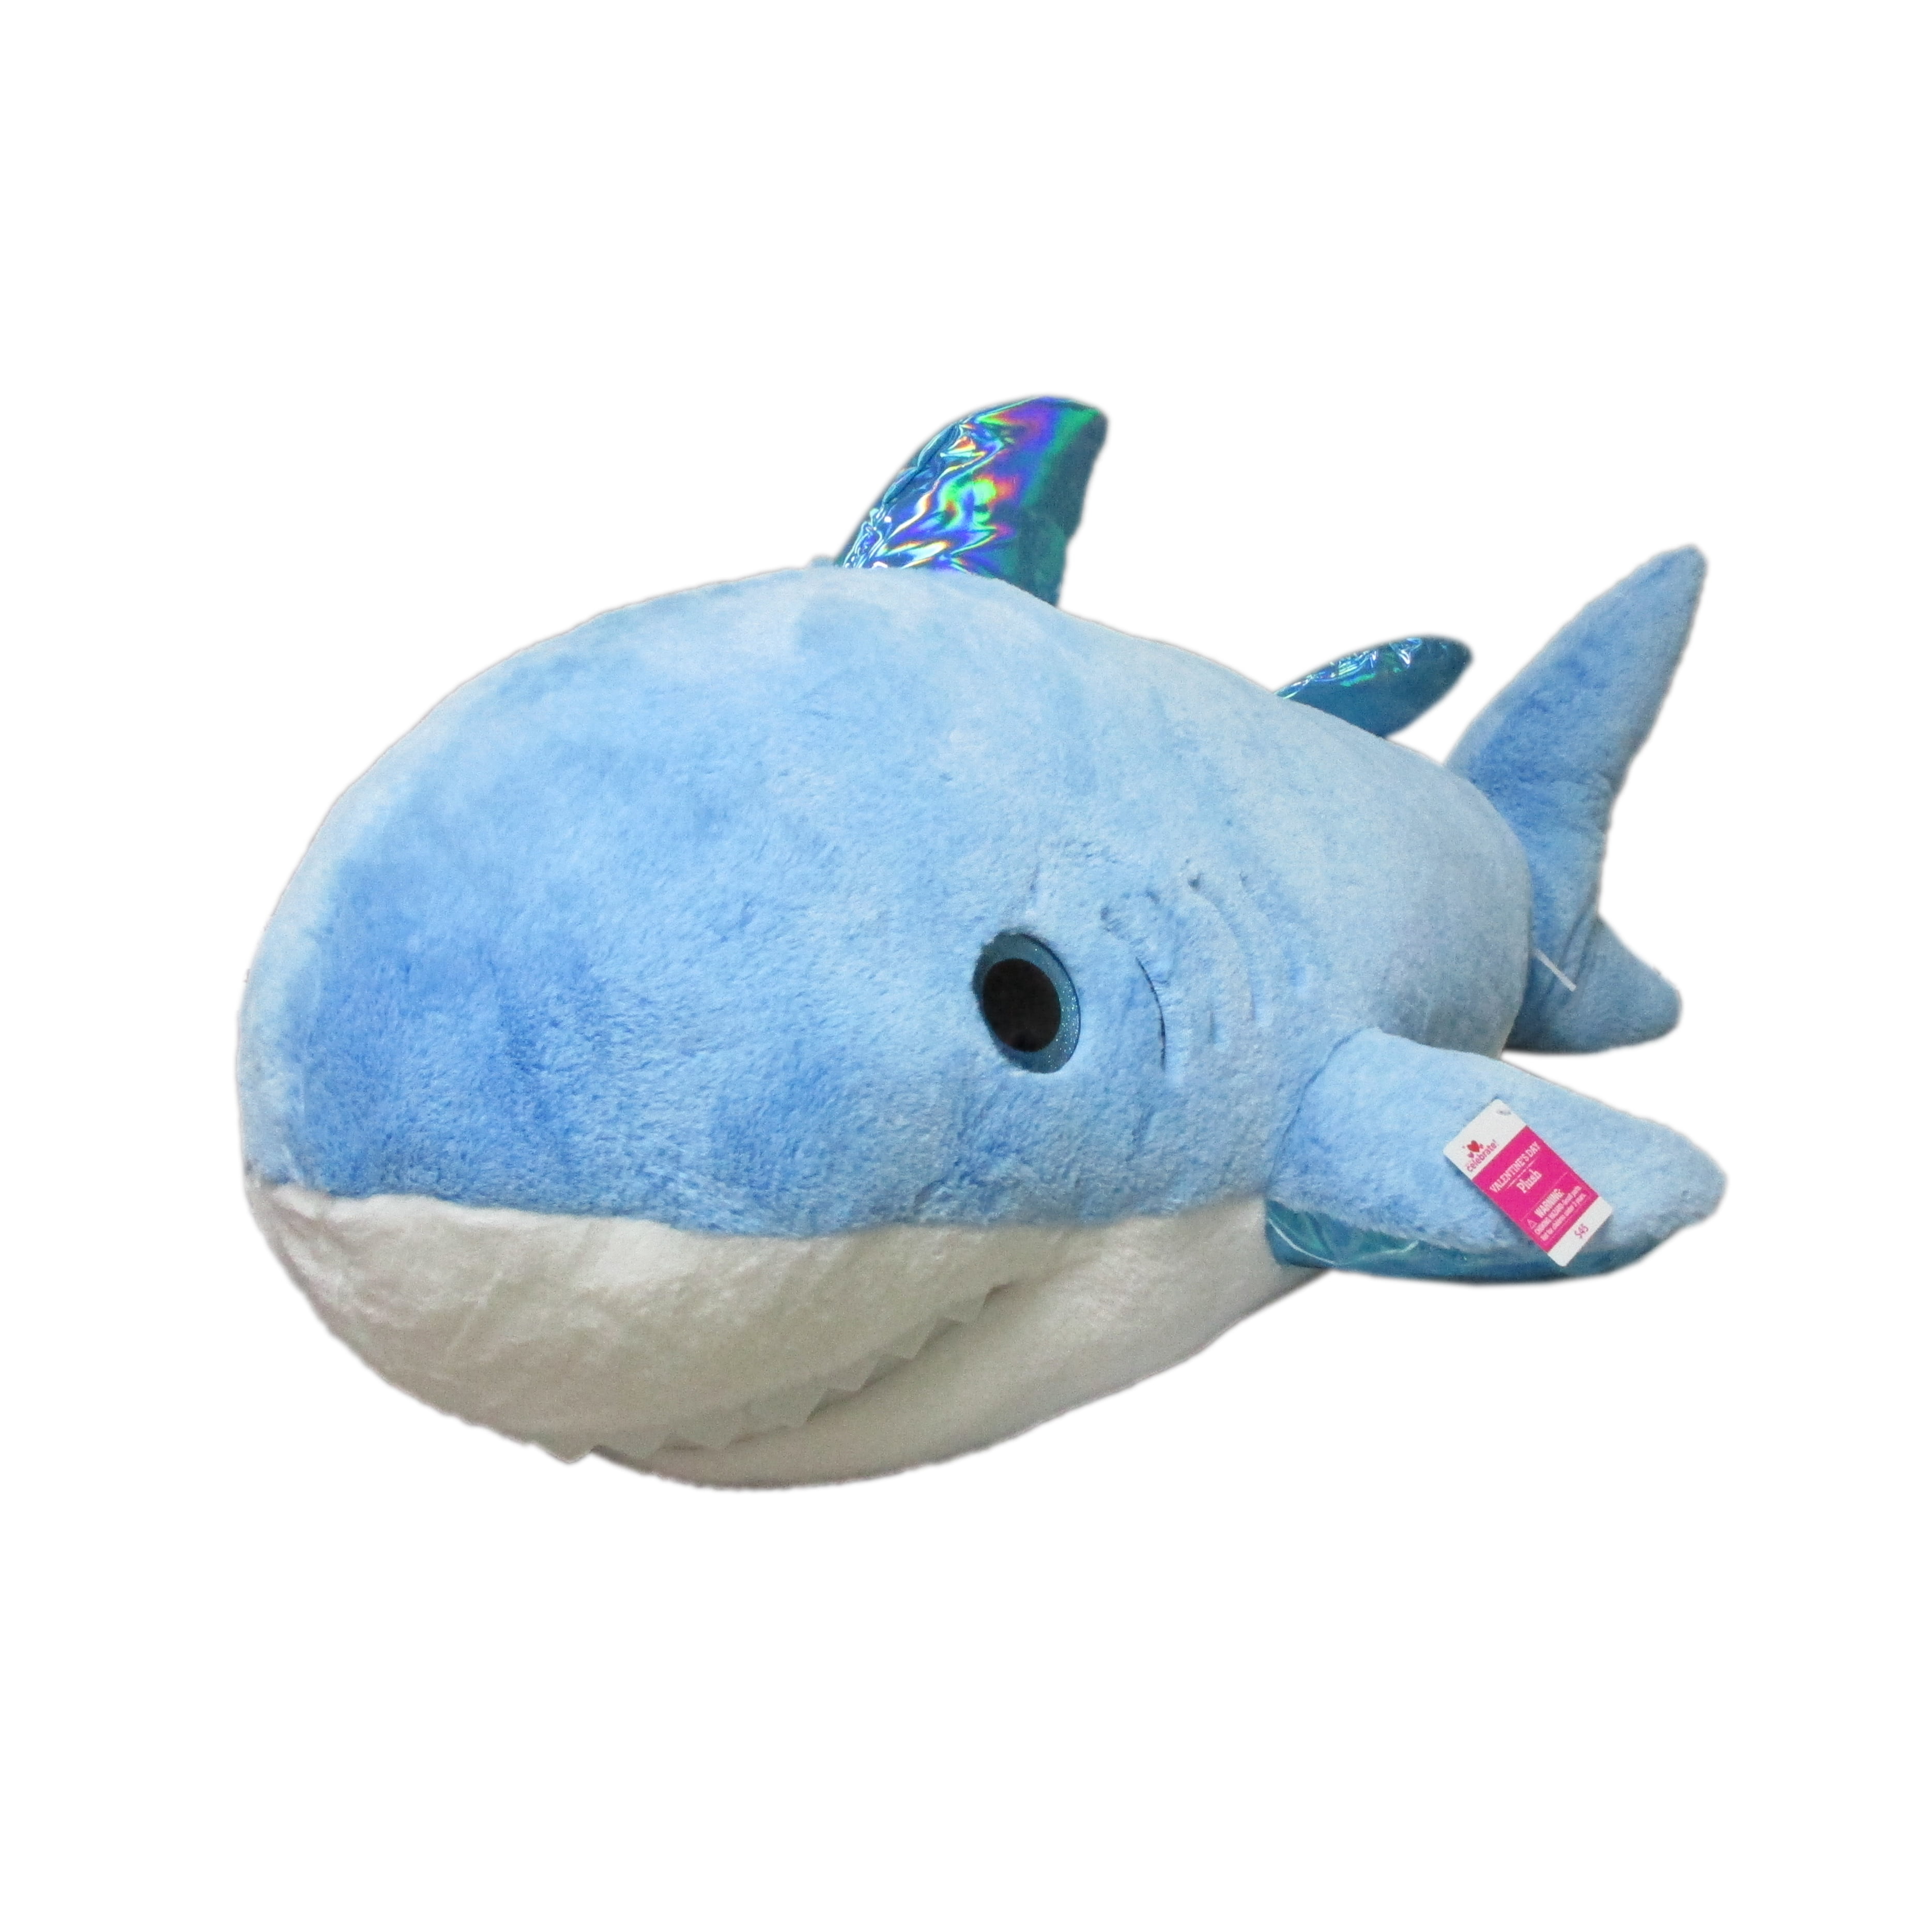 large stuffed shark toy